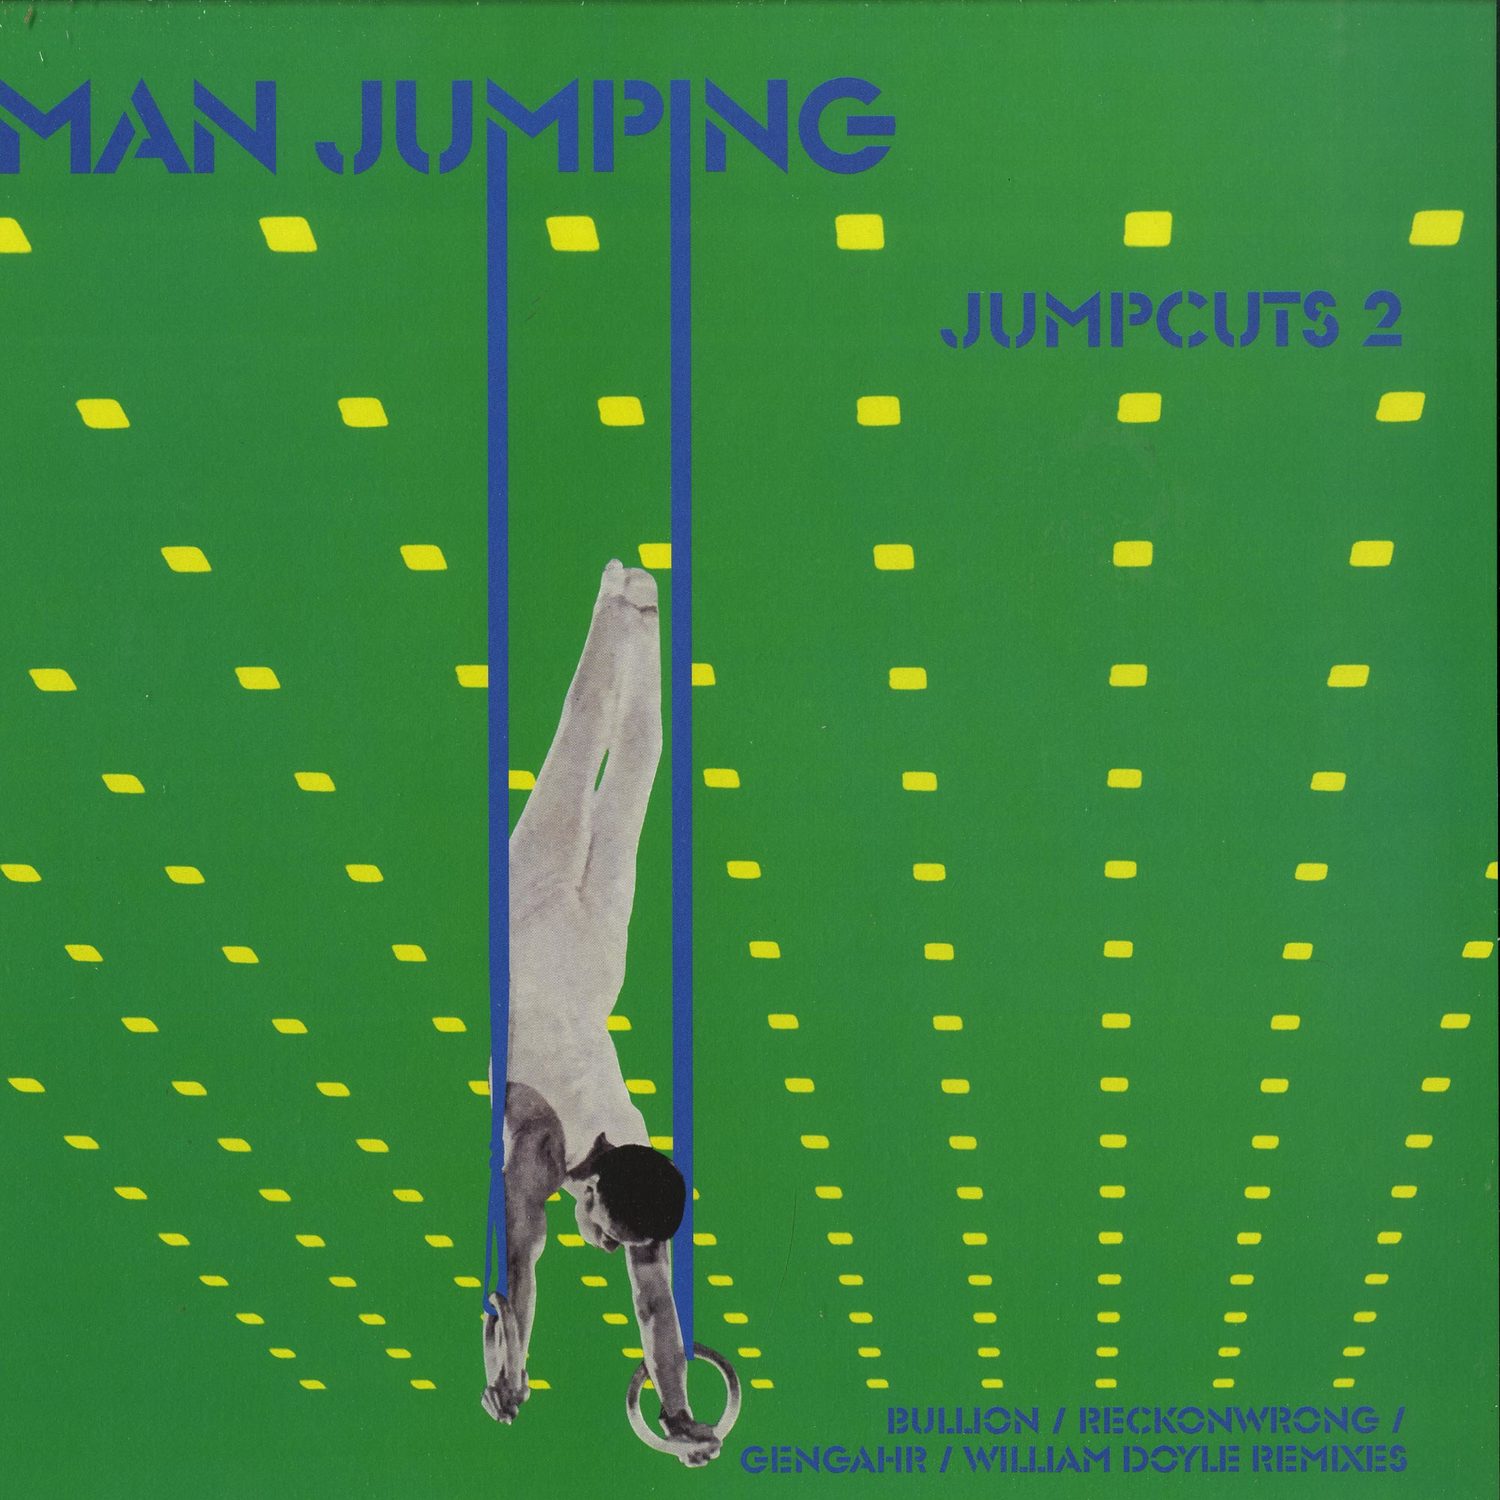 Man Jumping - JUMPCUTS 2 